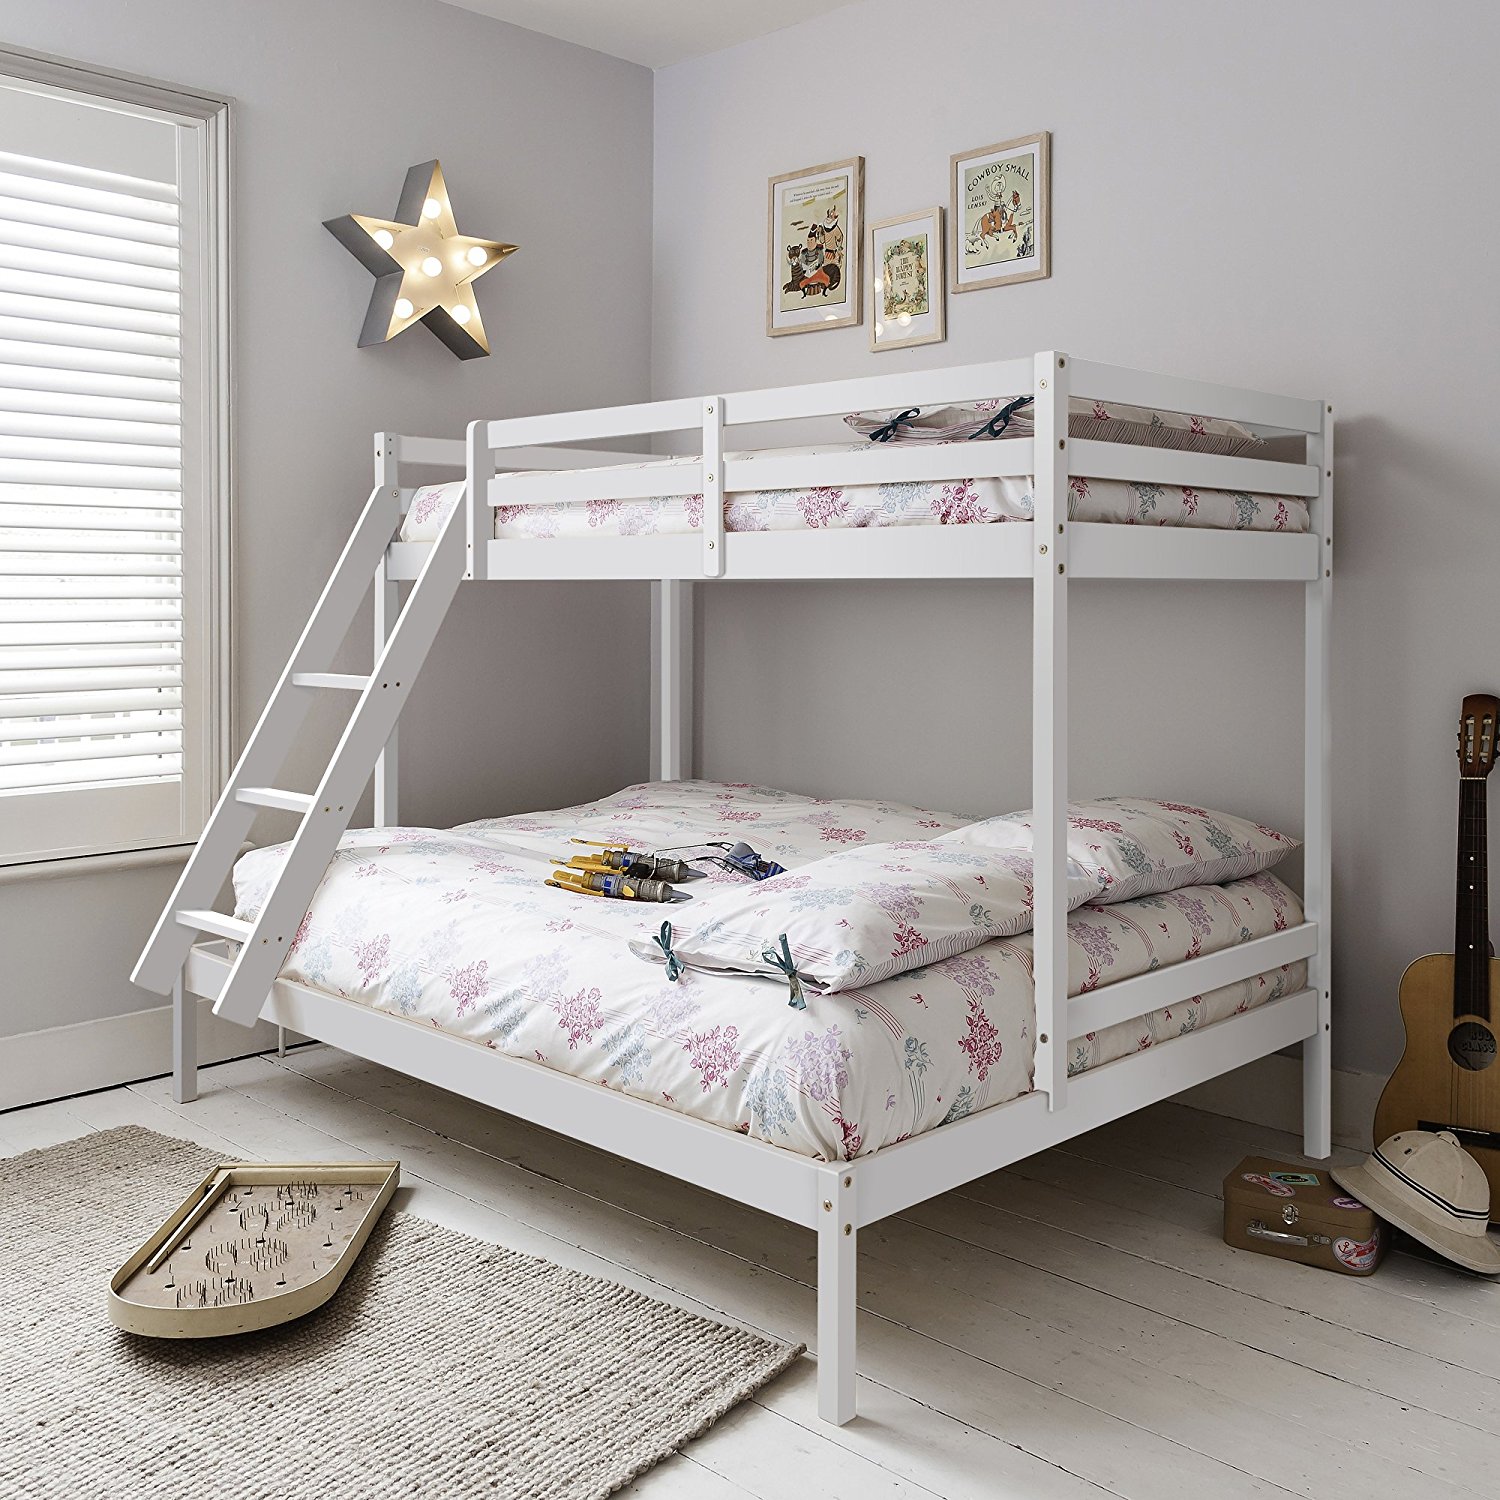 single beds for children